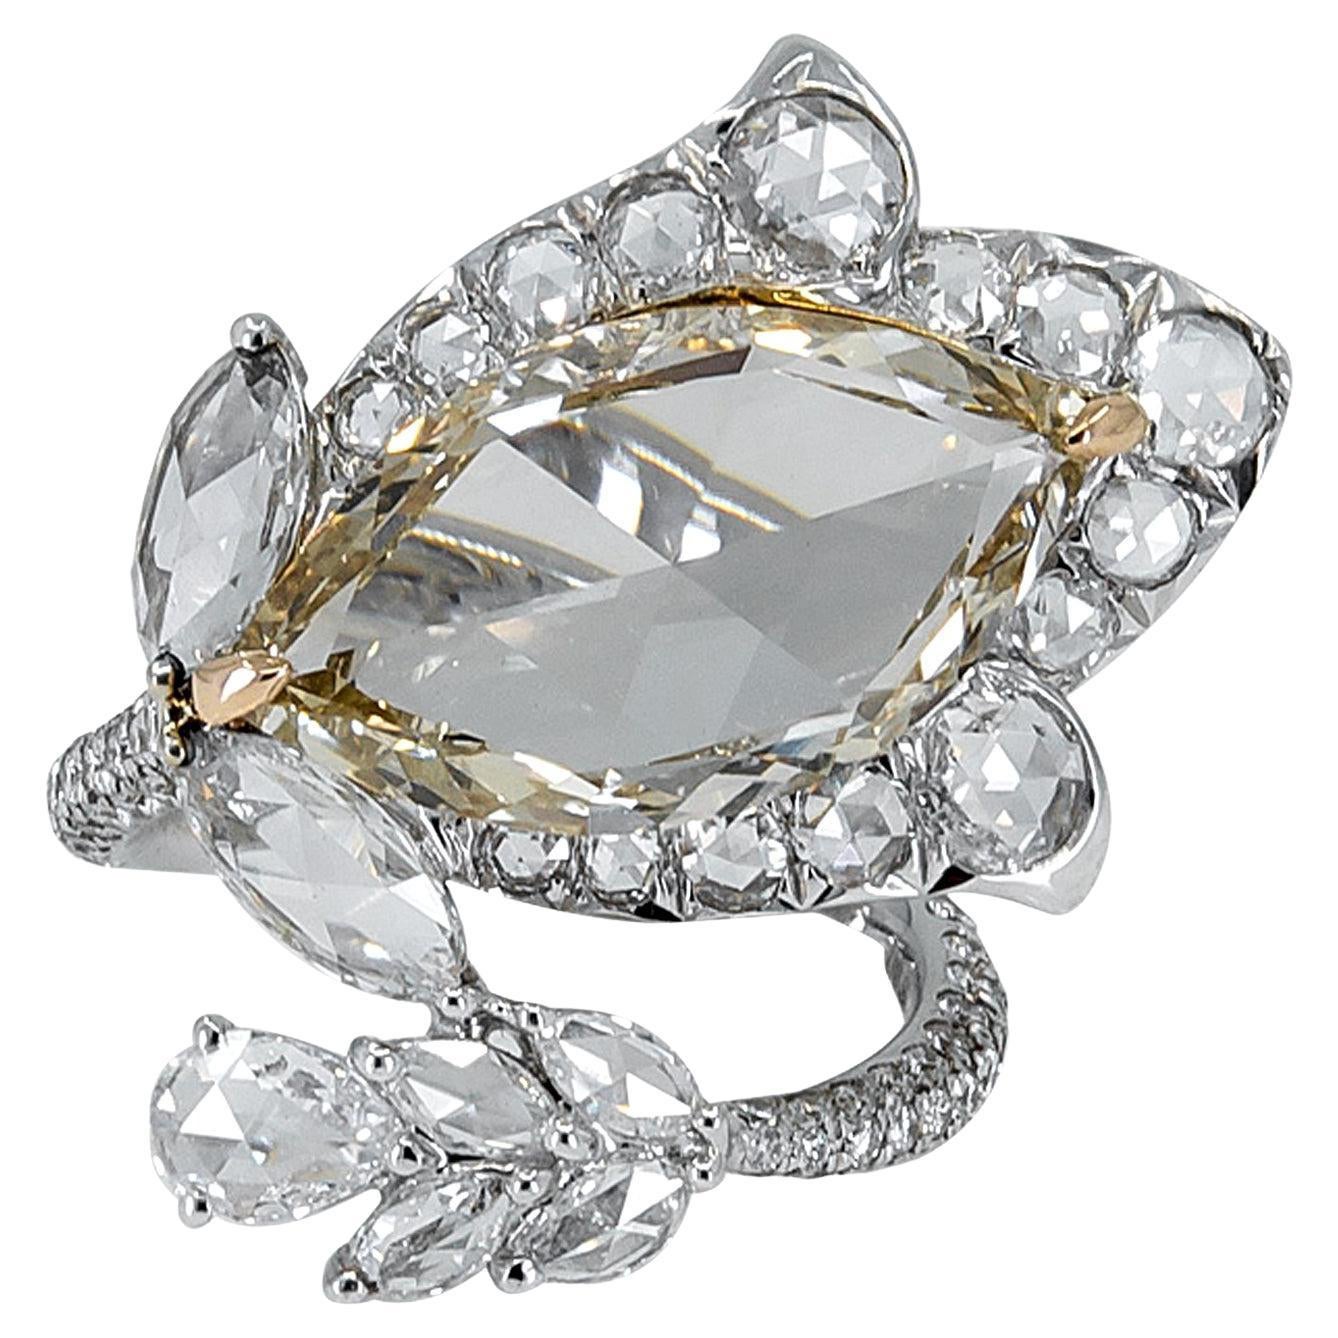 Spectra Fine Jewelry GIA Certified 5.04 Carat Fancy Brown-Yellow Diamond Ring